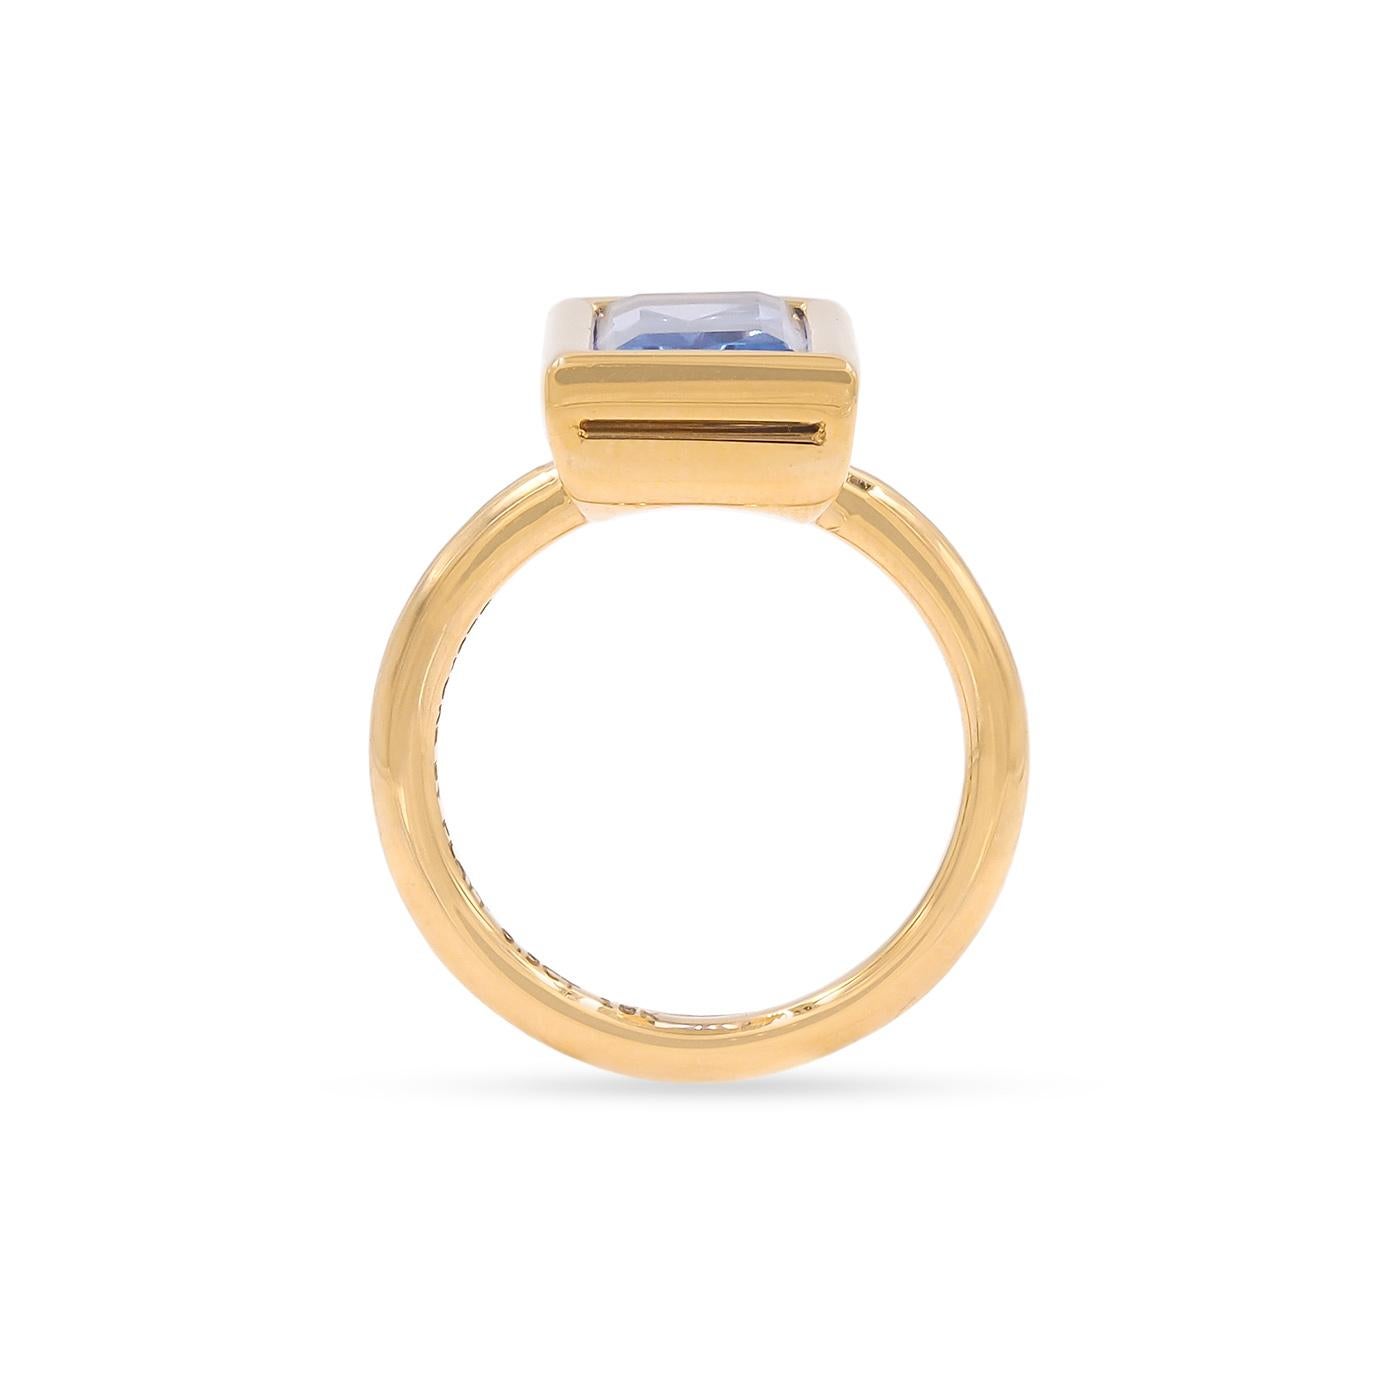 Contemporary 6.50 Carat Ceylon AGL Certified Blue Sapphire Ring from Bespoke by Platt